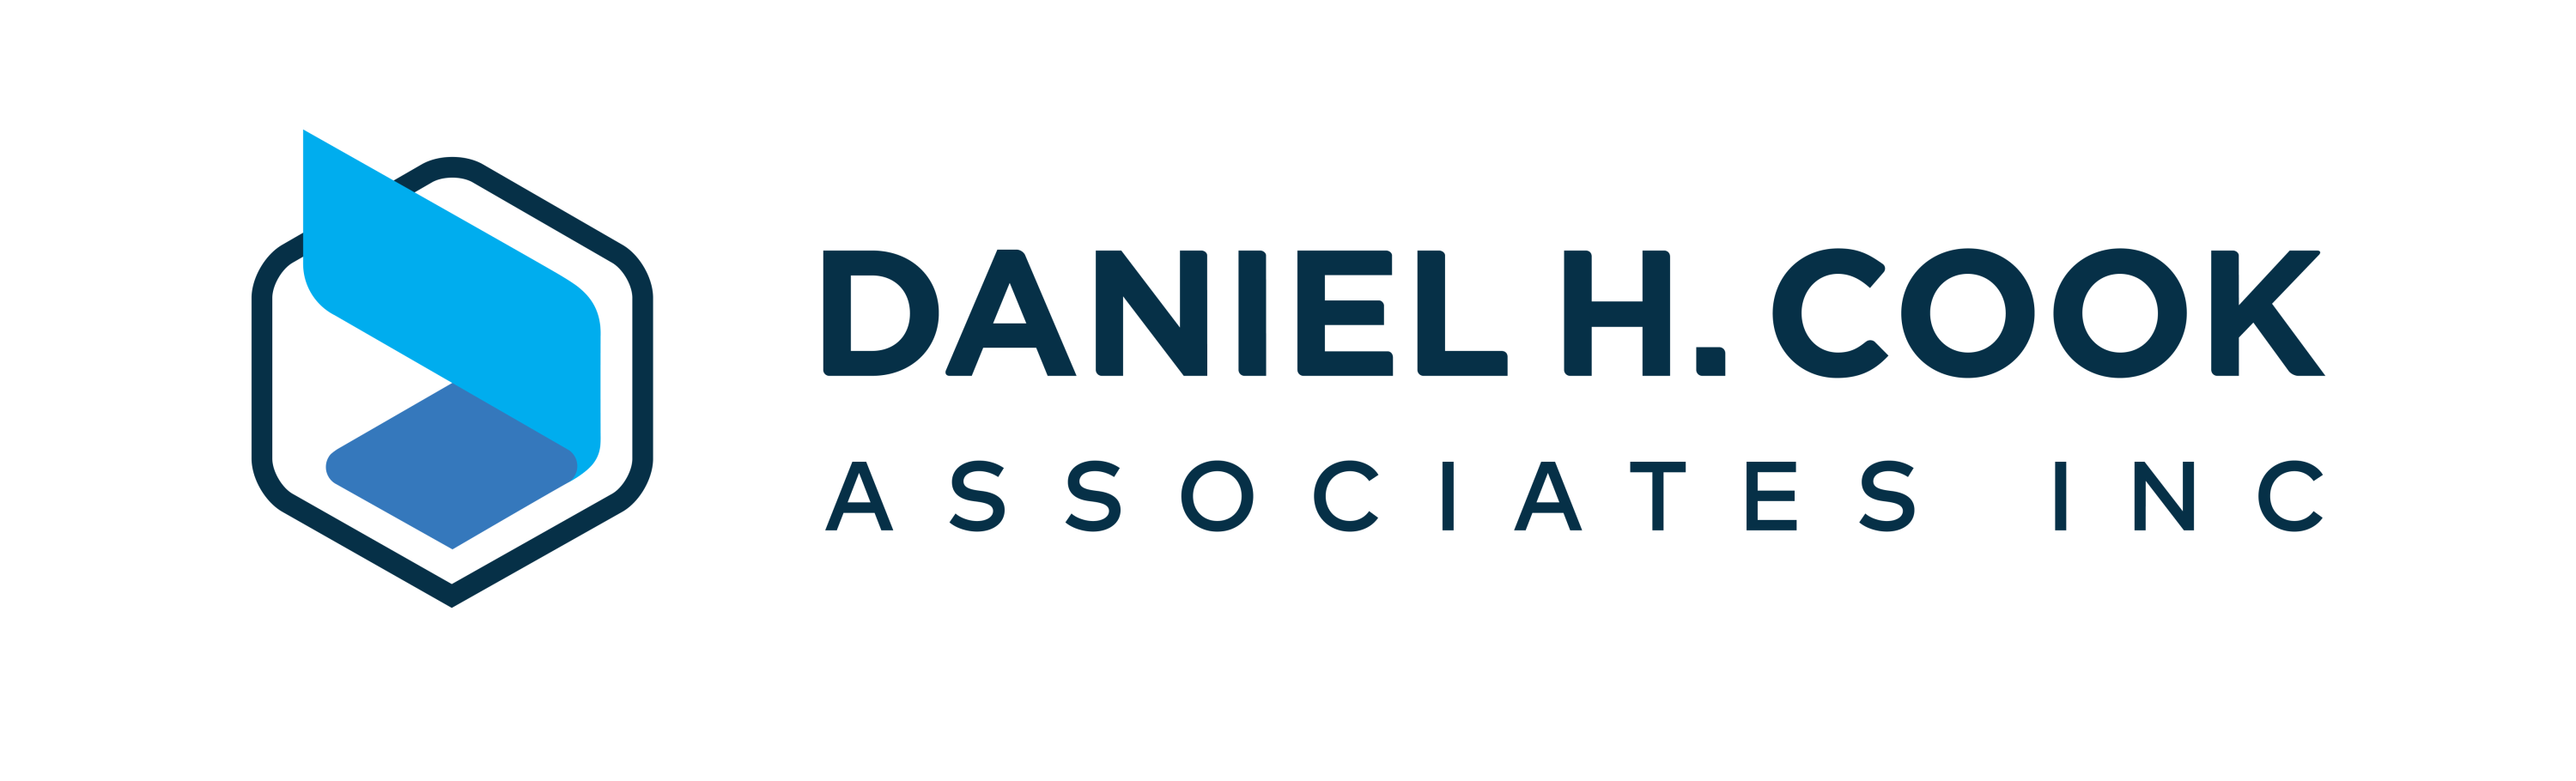 Daniel H Cook Associates, Inc. Slide Image